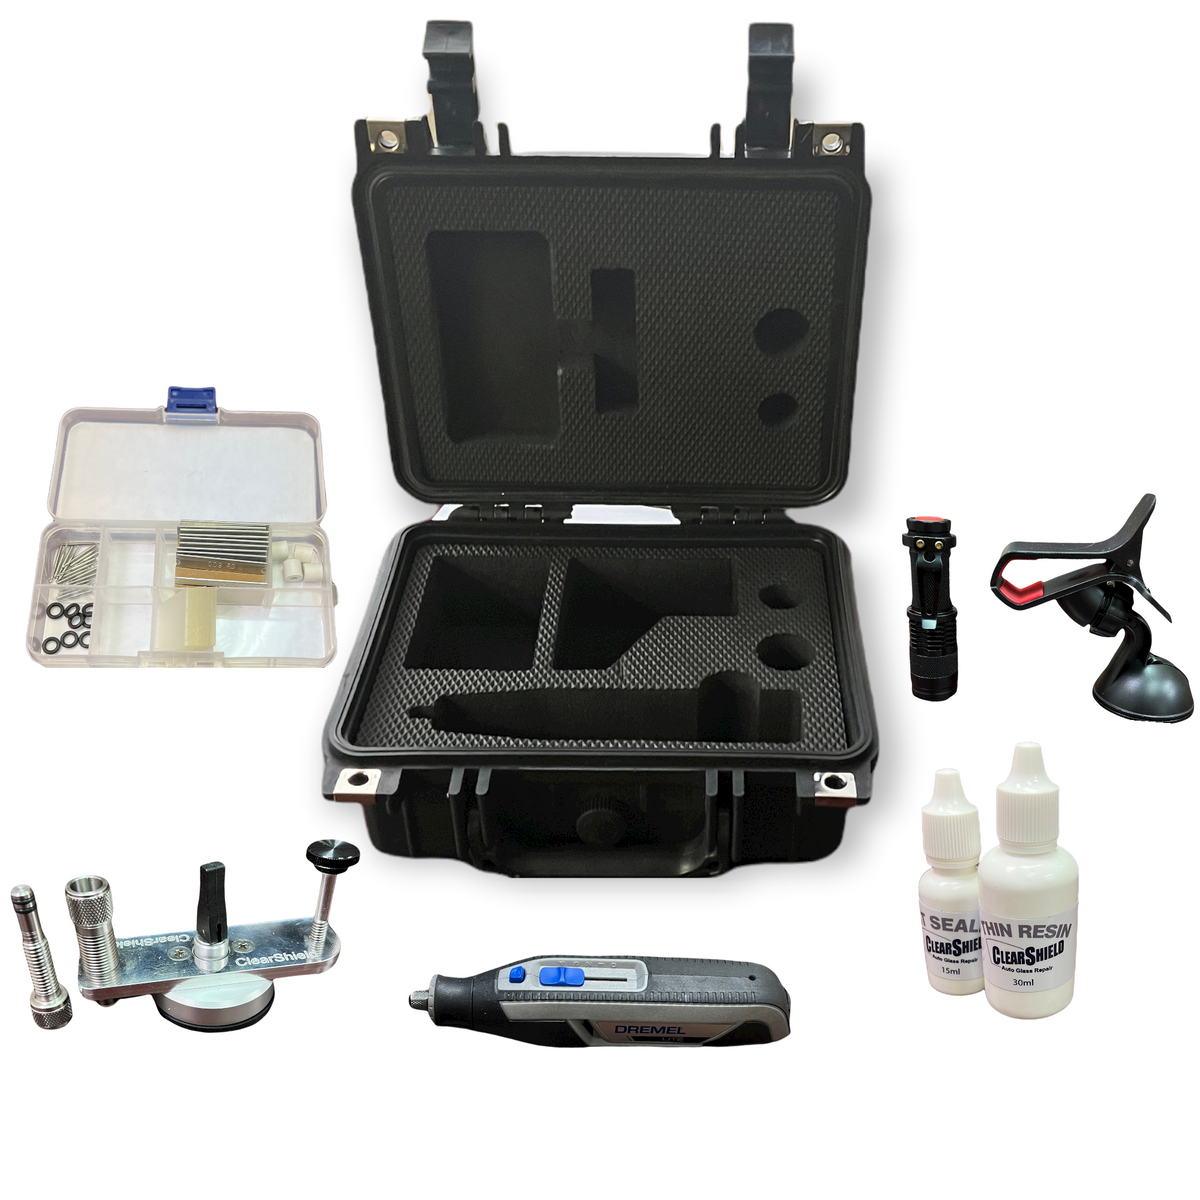 Premium Windshield Repair Kit, Tools, Assortments/ Package Deals